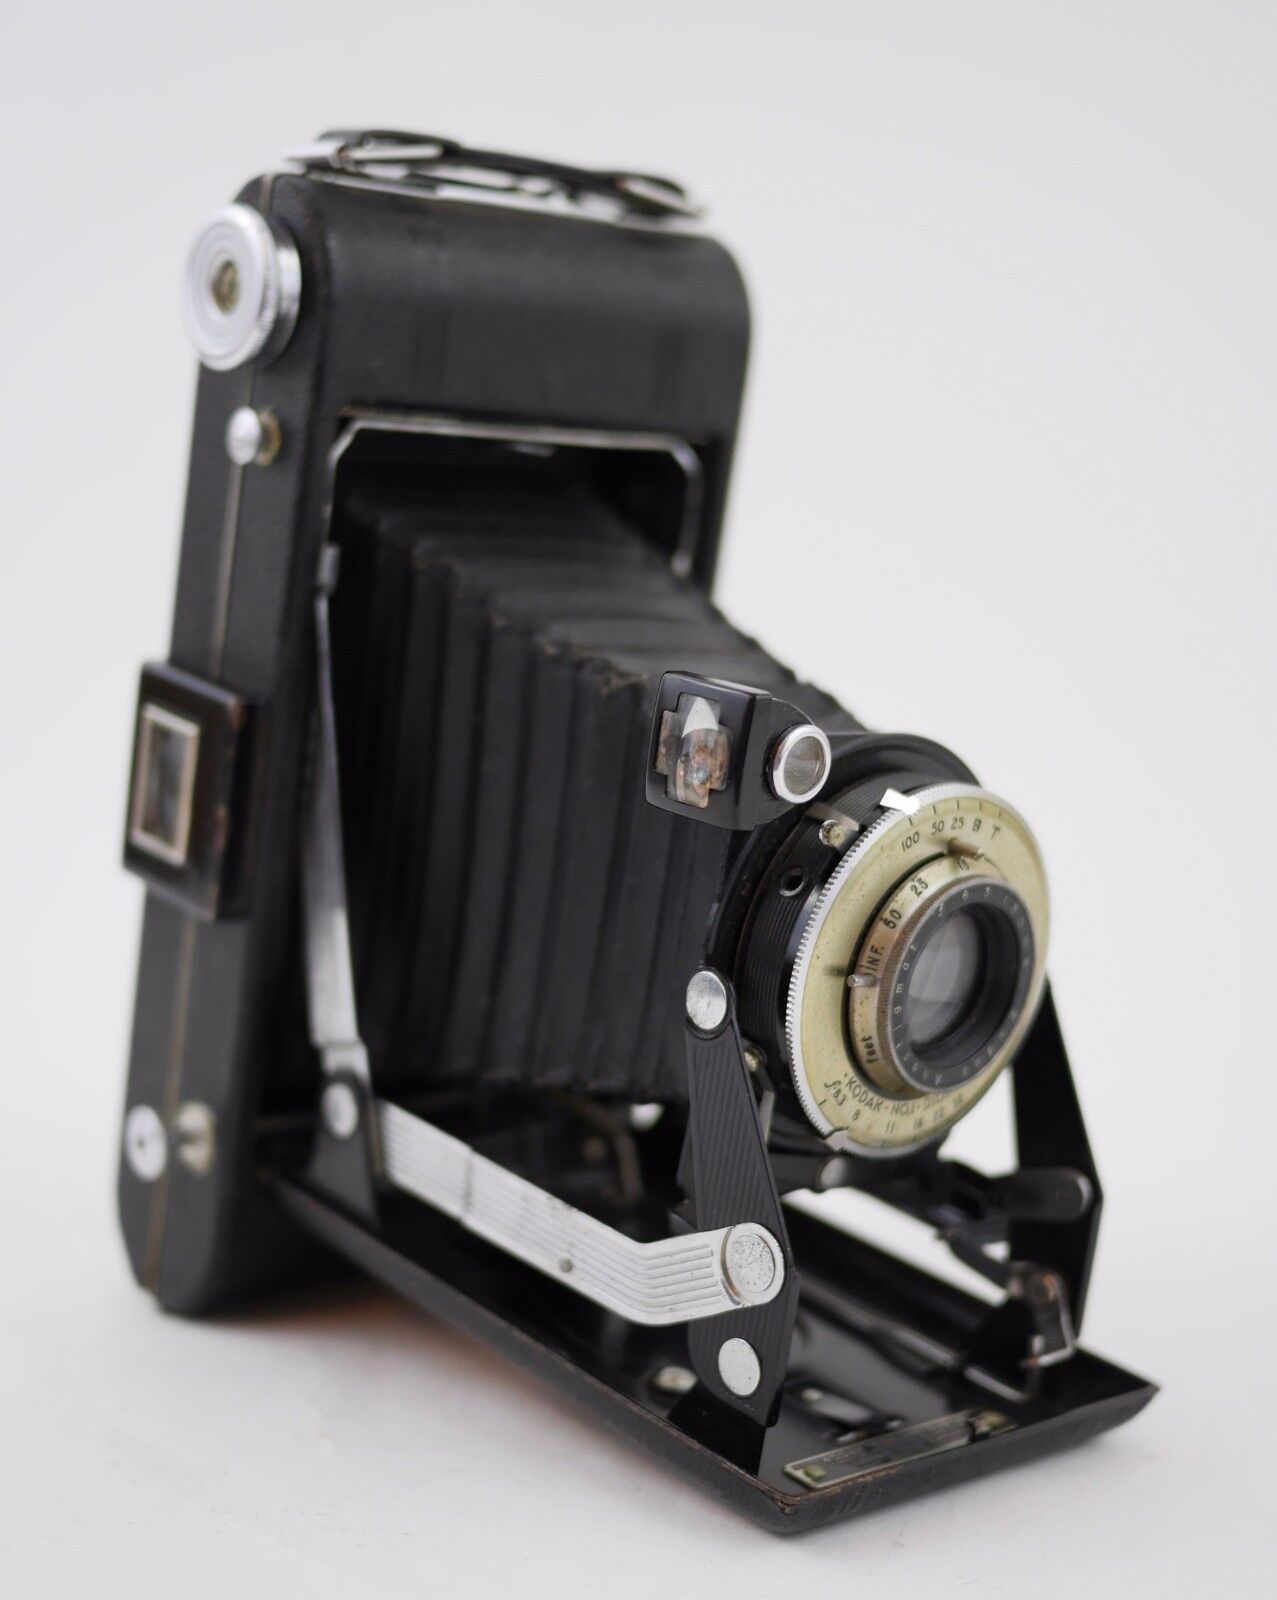 VINTAGE Max 50% OFF KODAK Directly managed store ANASTIGMAT No.1 DIOMATIC Pocket - Camera Folding